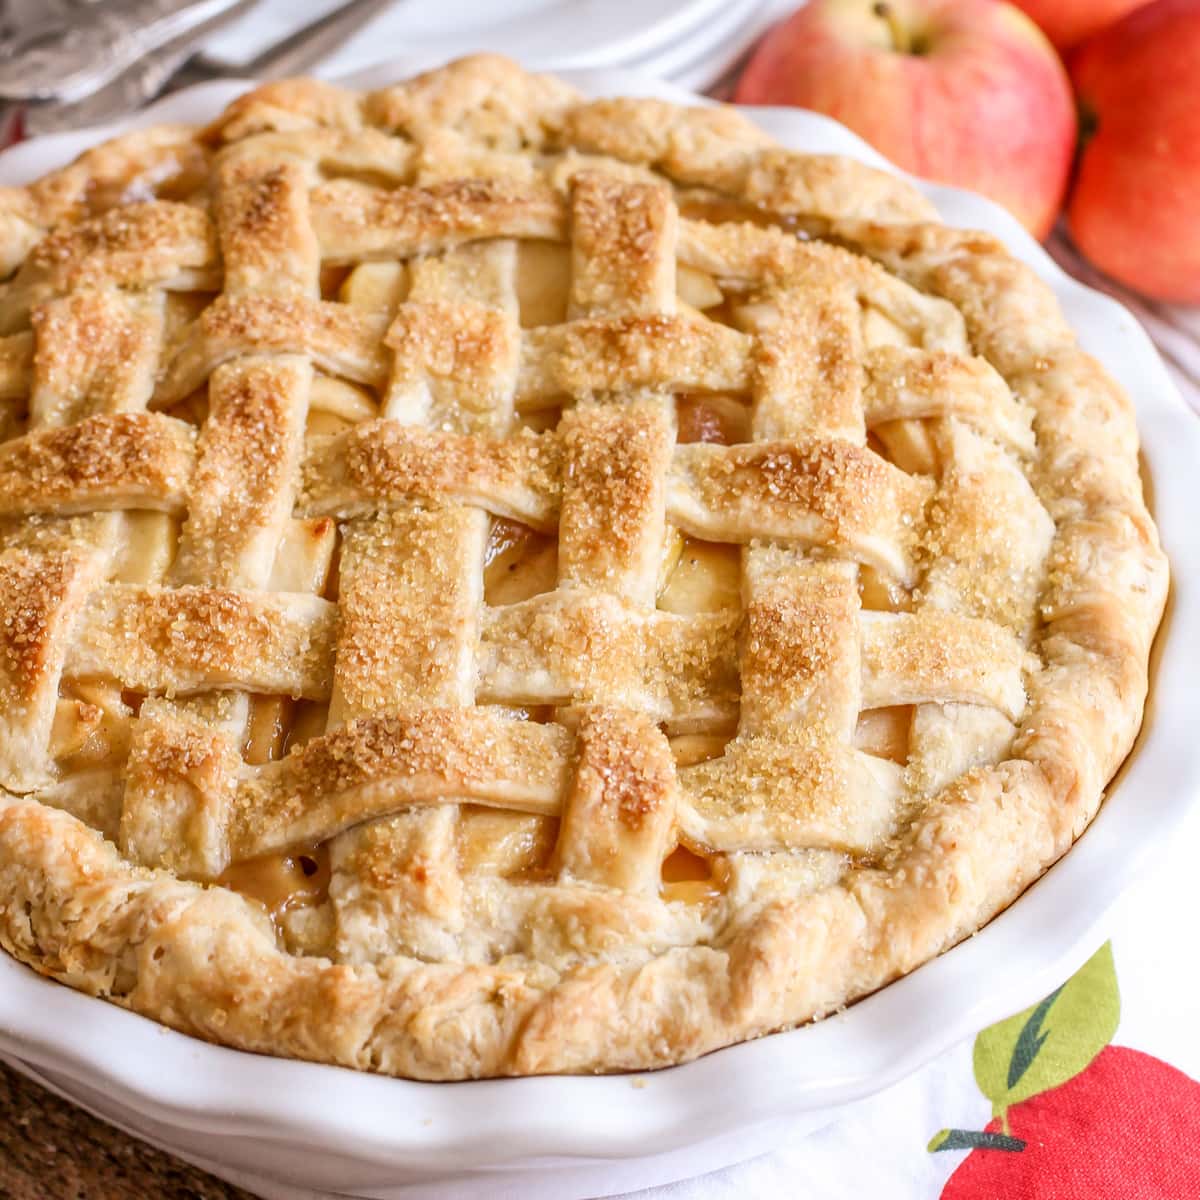 Christmas desserts - an entire best apple pie.